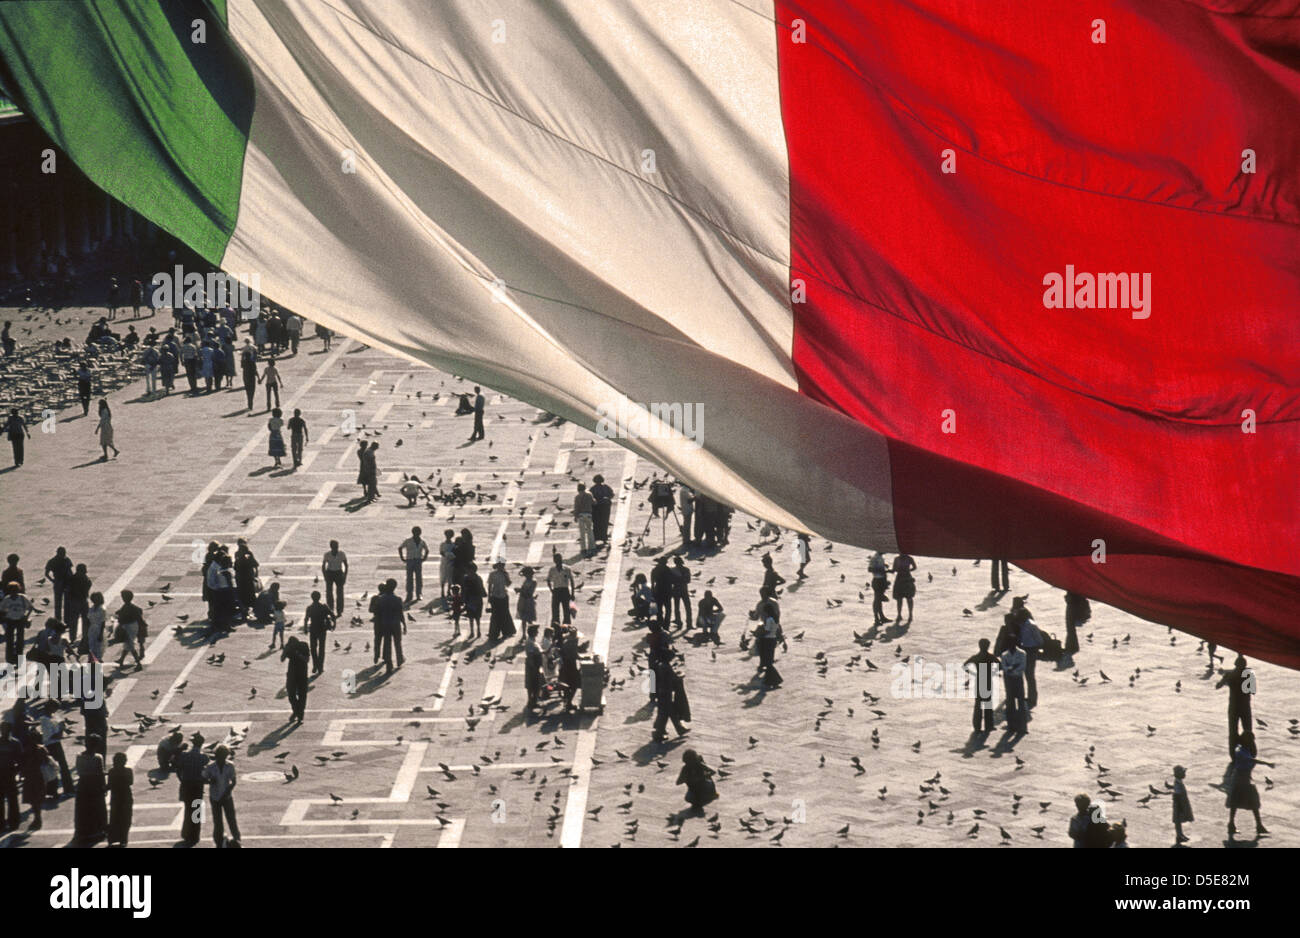 Italian flag in front of St Mark's Basilica, St Mark's Square, Venice, Italy Stock Photo